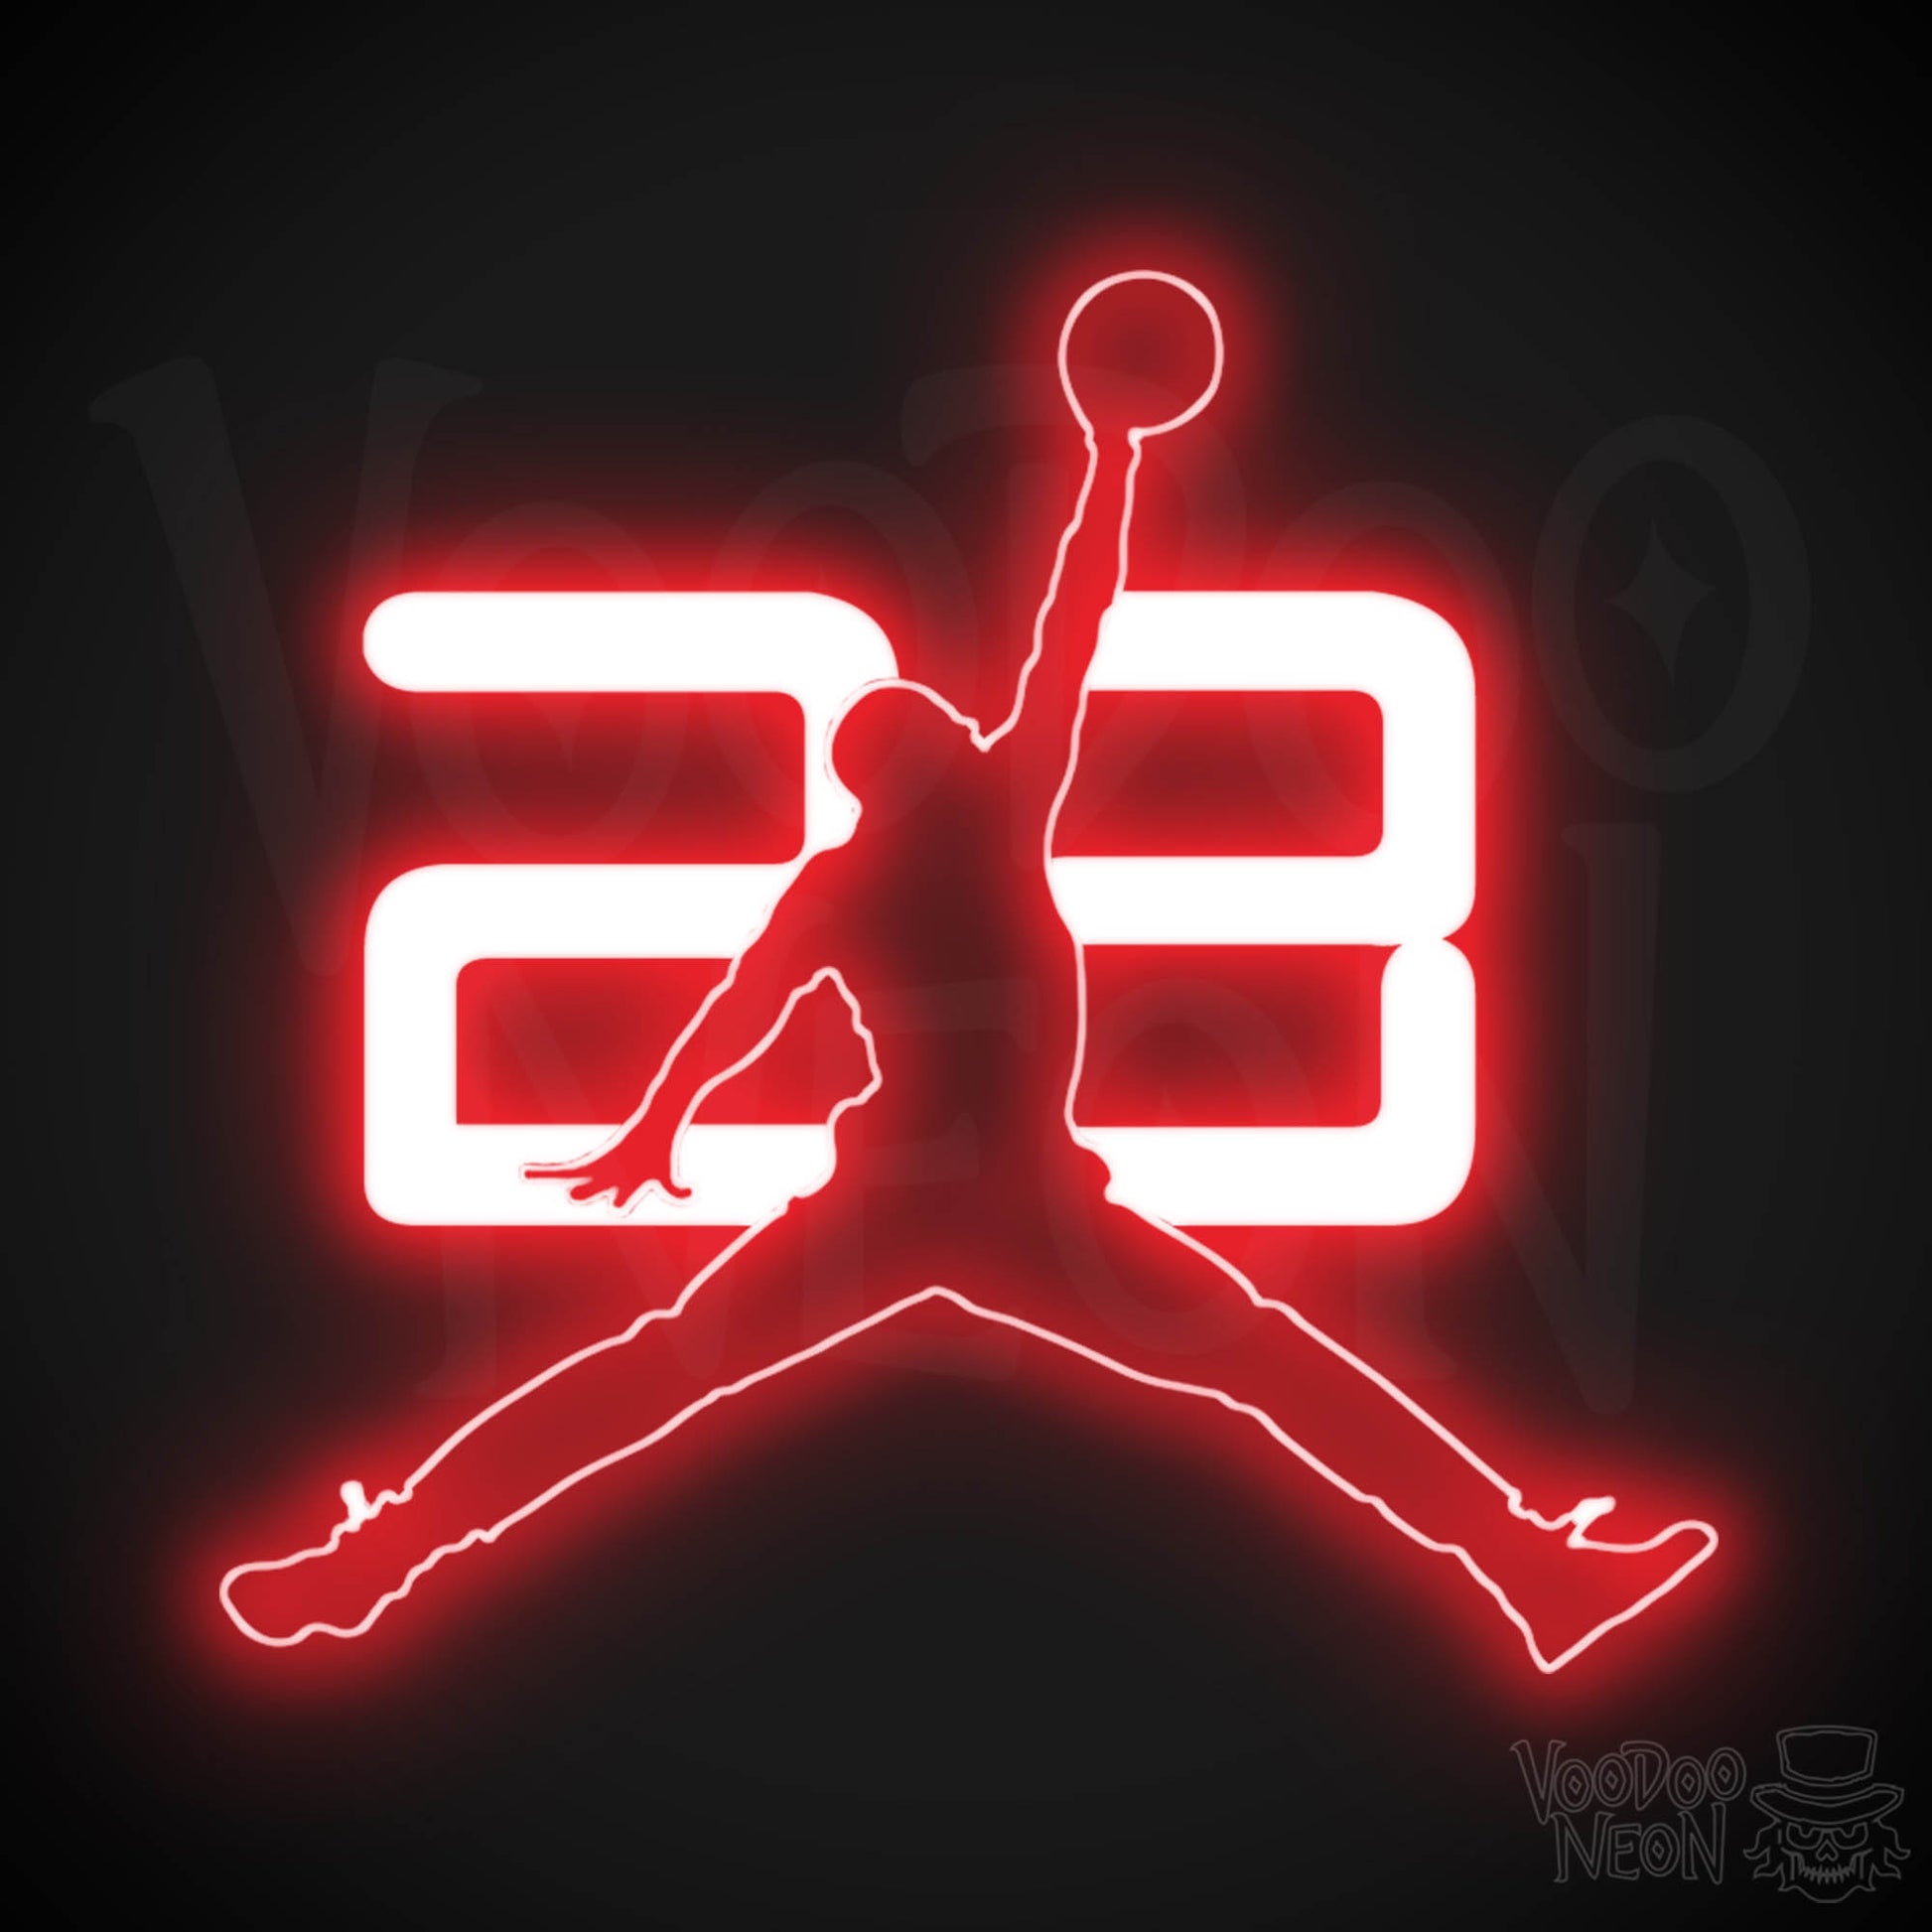 Neon Jordan Dunk - Michael Jordan Neon Wall Art - Neon Basketball Dunk Sign - Color Red